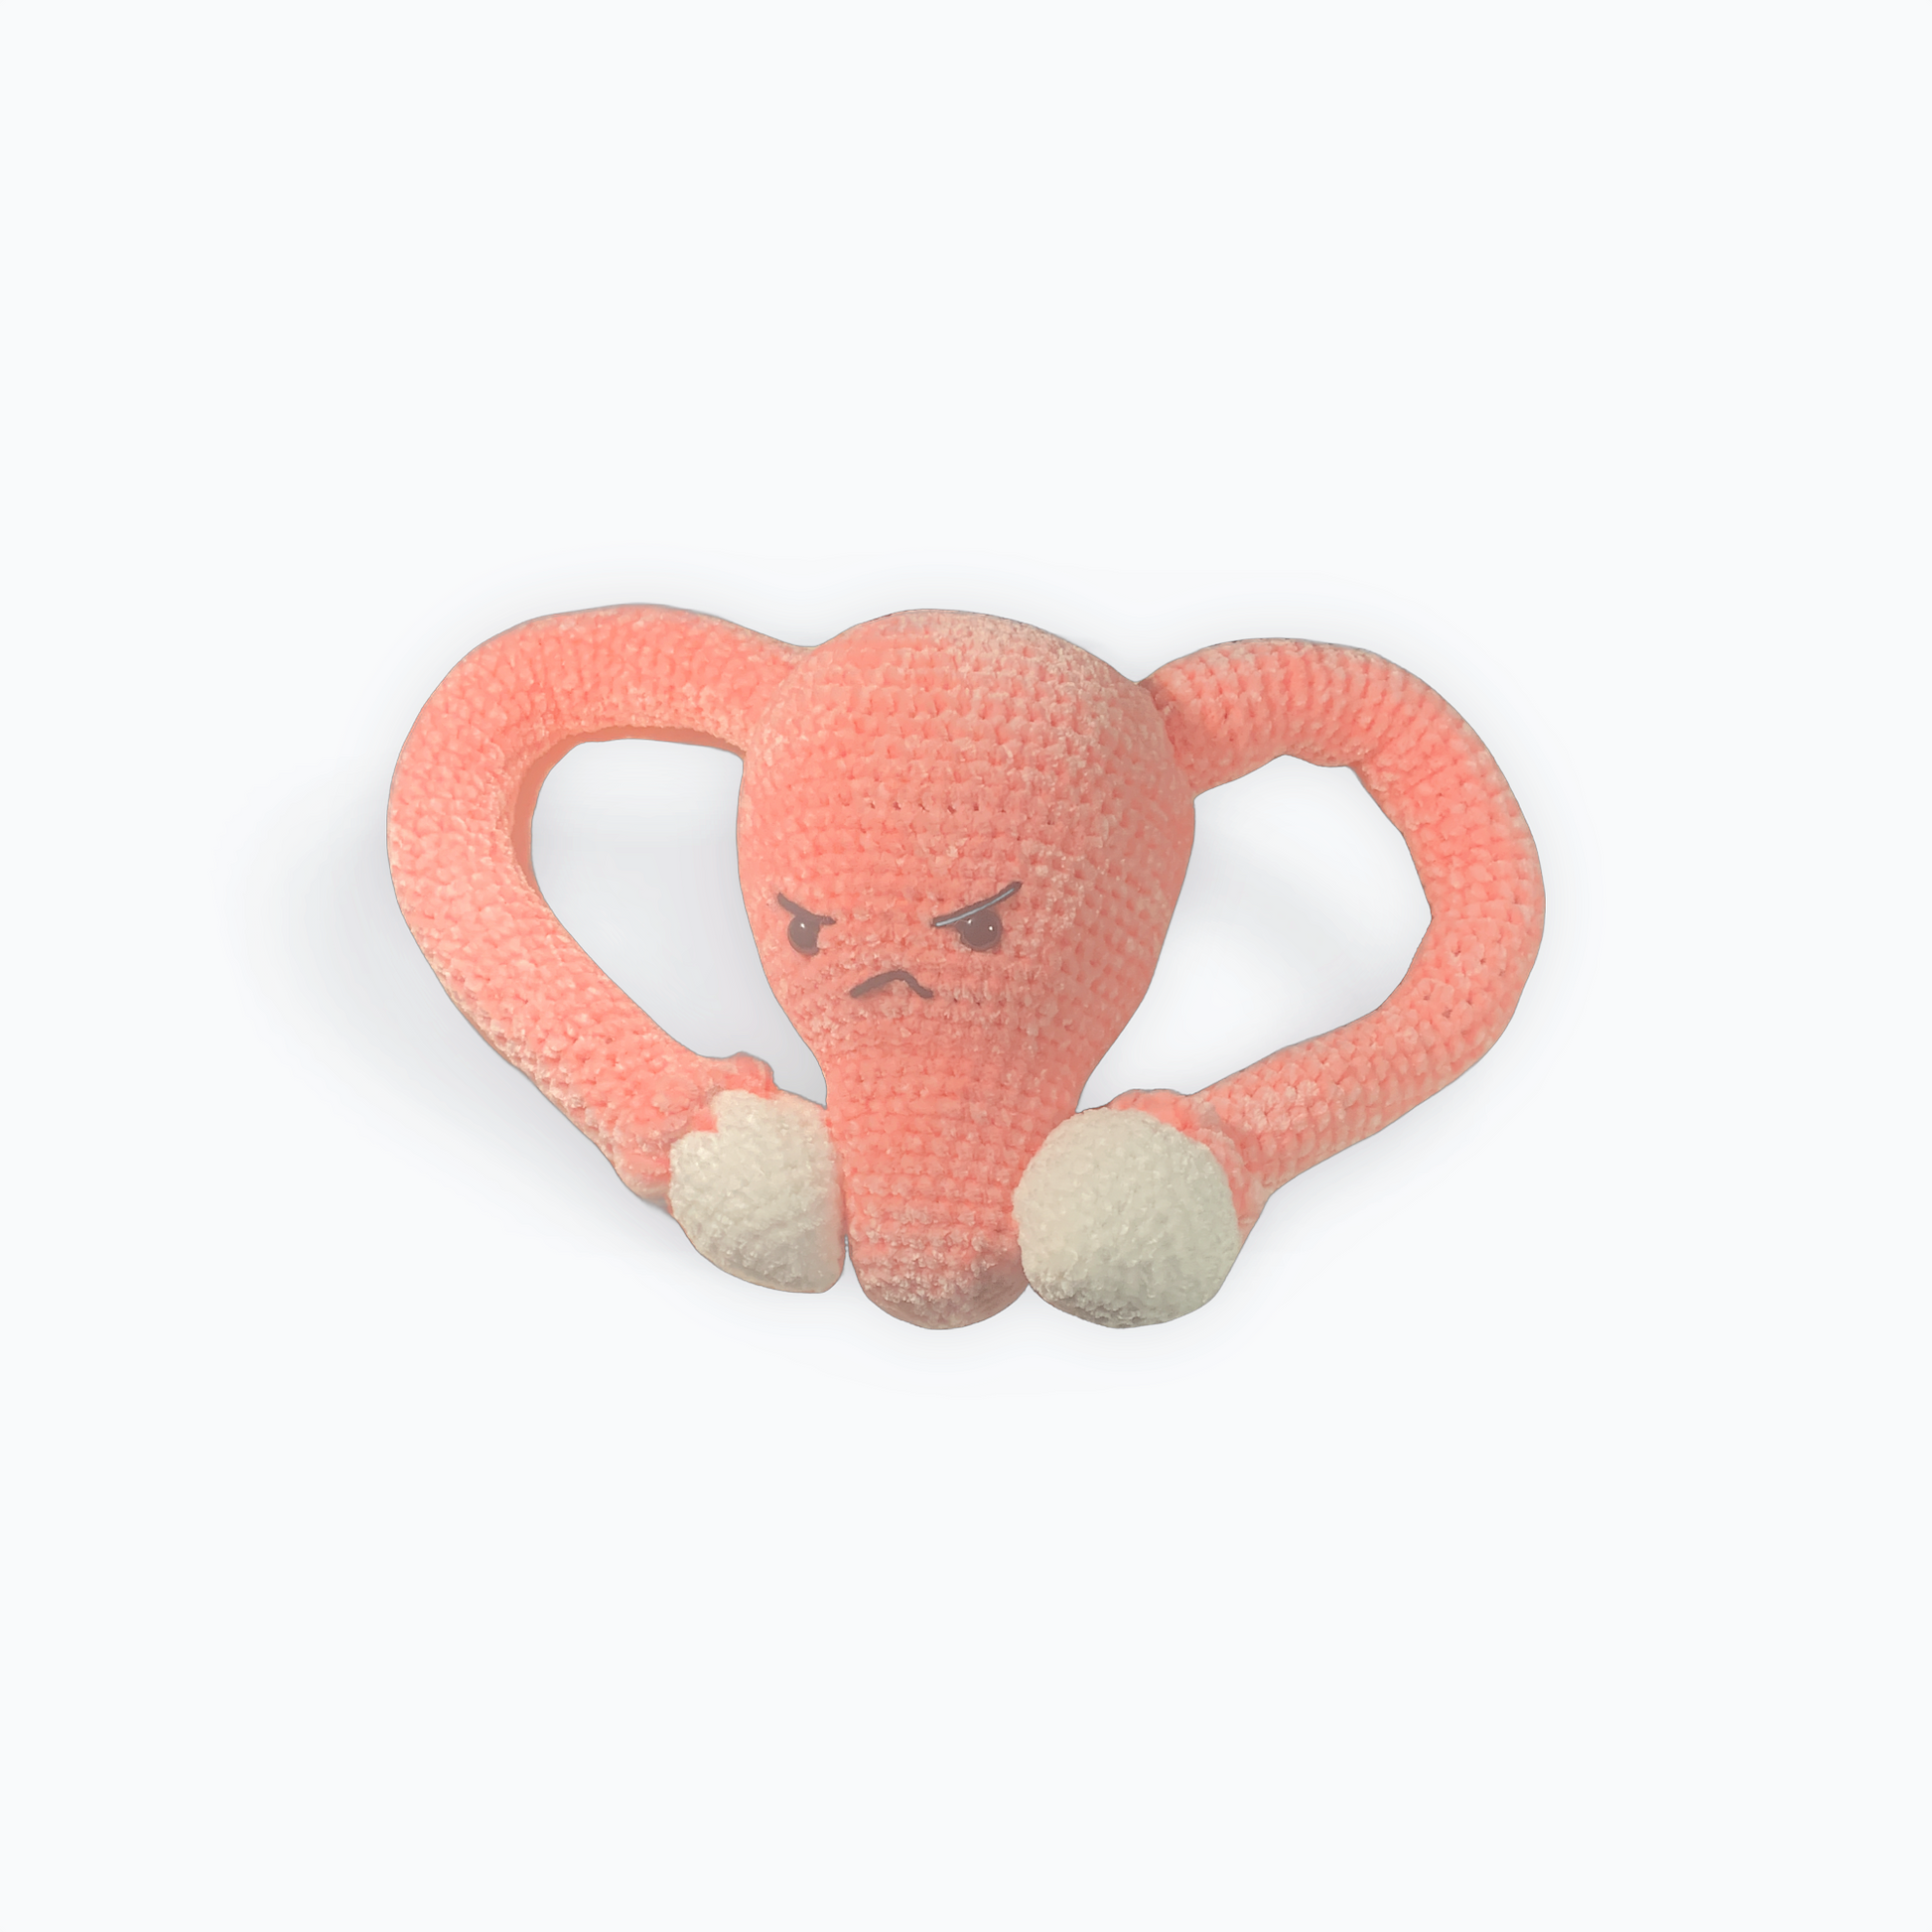 Disgruntled Uterus Amigurumi - Stitchy Frood